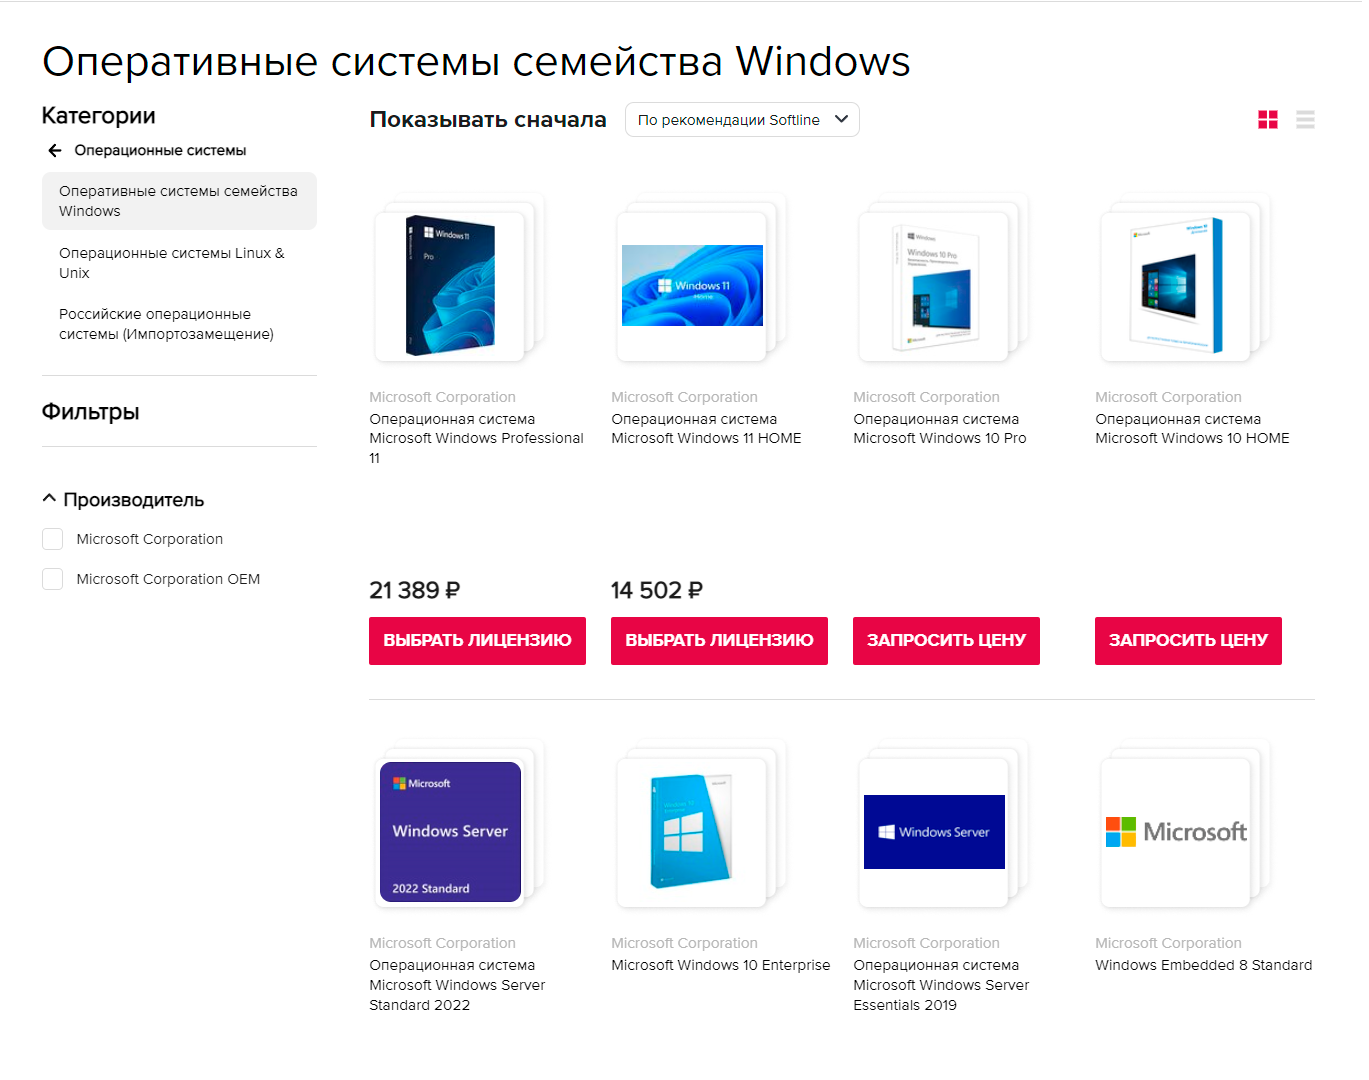 Где купить Windows в условиях санкций? - 5